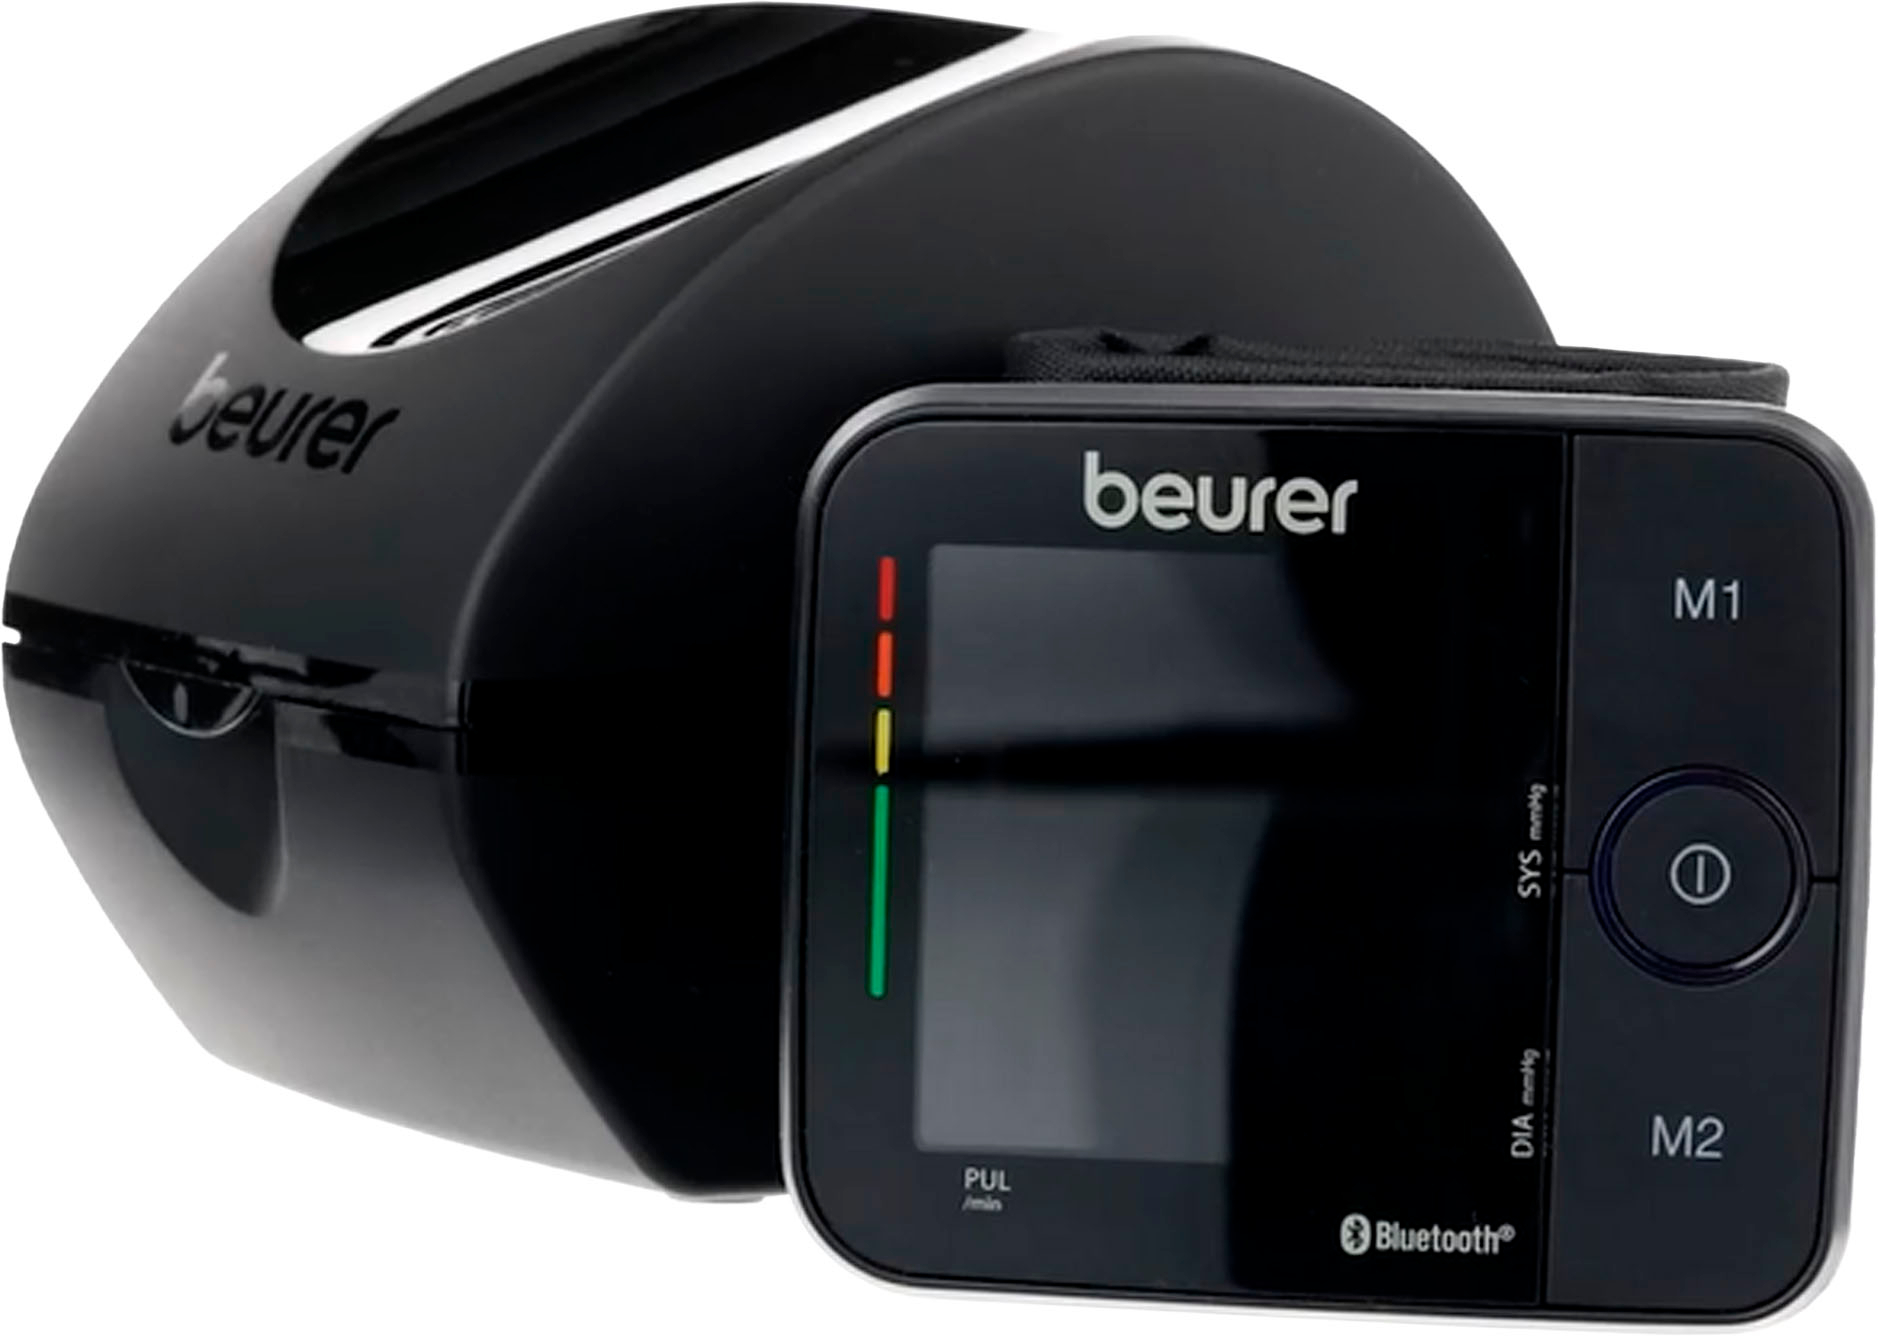 Digital Wrist Blood Pressure Monitor, Bluetooth connectivity